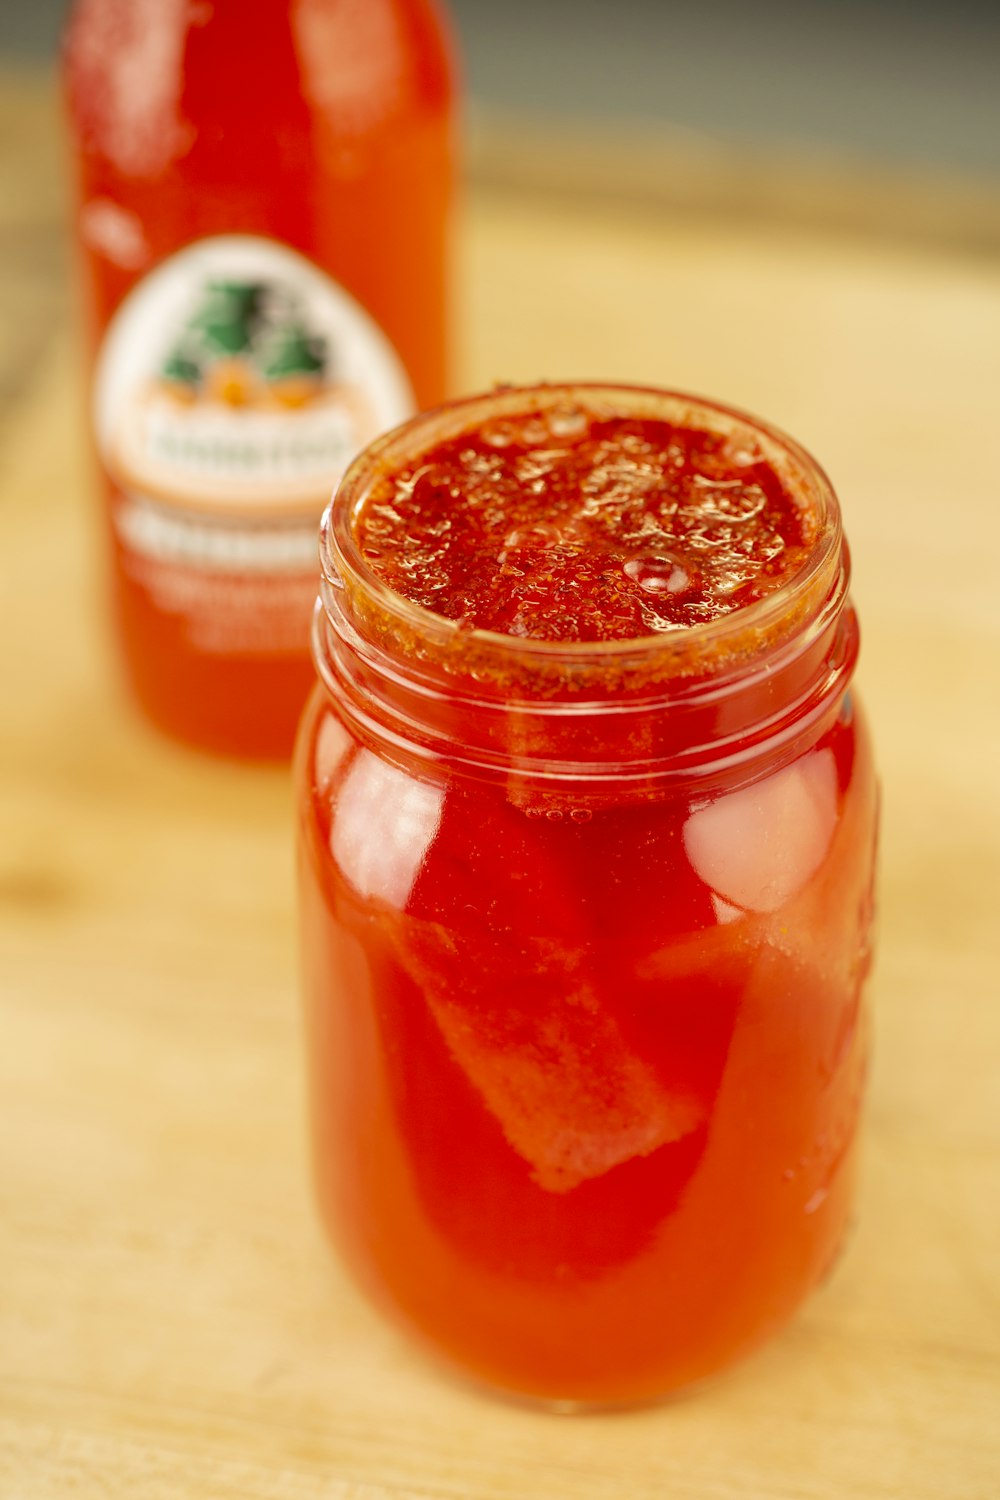 tesco tomato sauce jar on brown wooden table